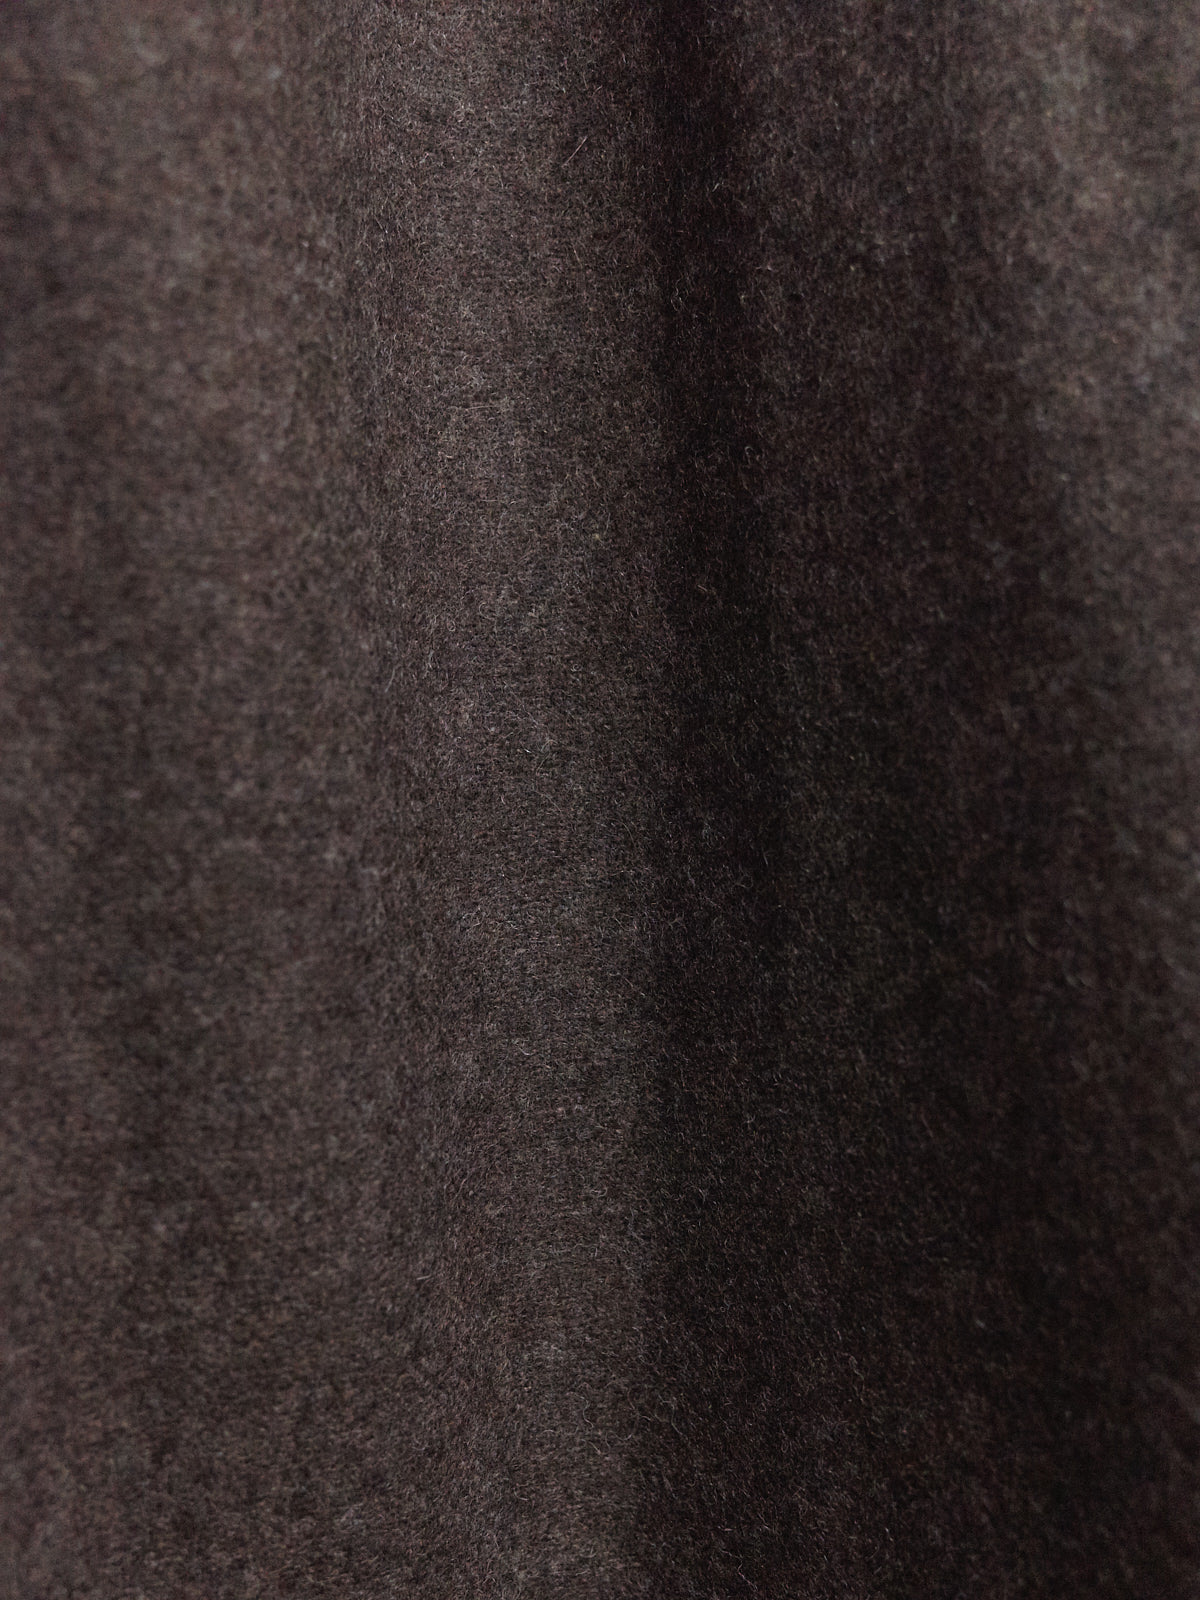 Windcoat Issey Miyake brown removable liner mackintosh coat - size M